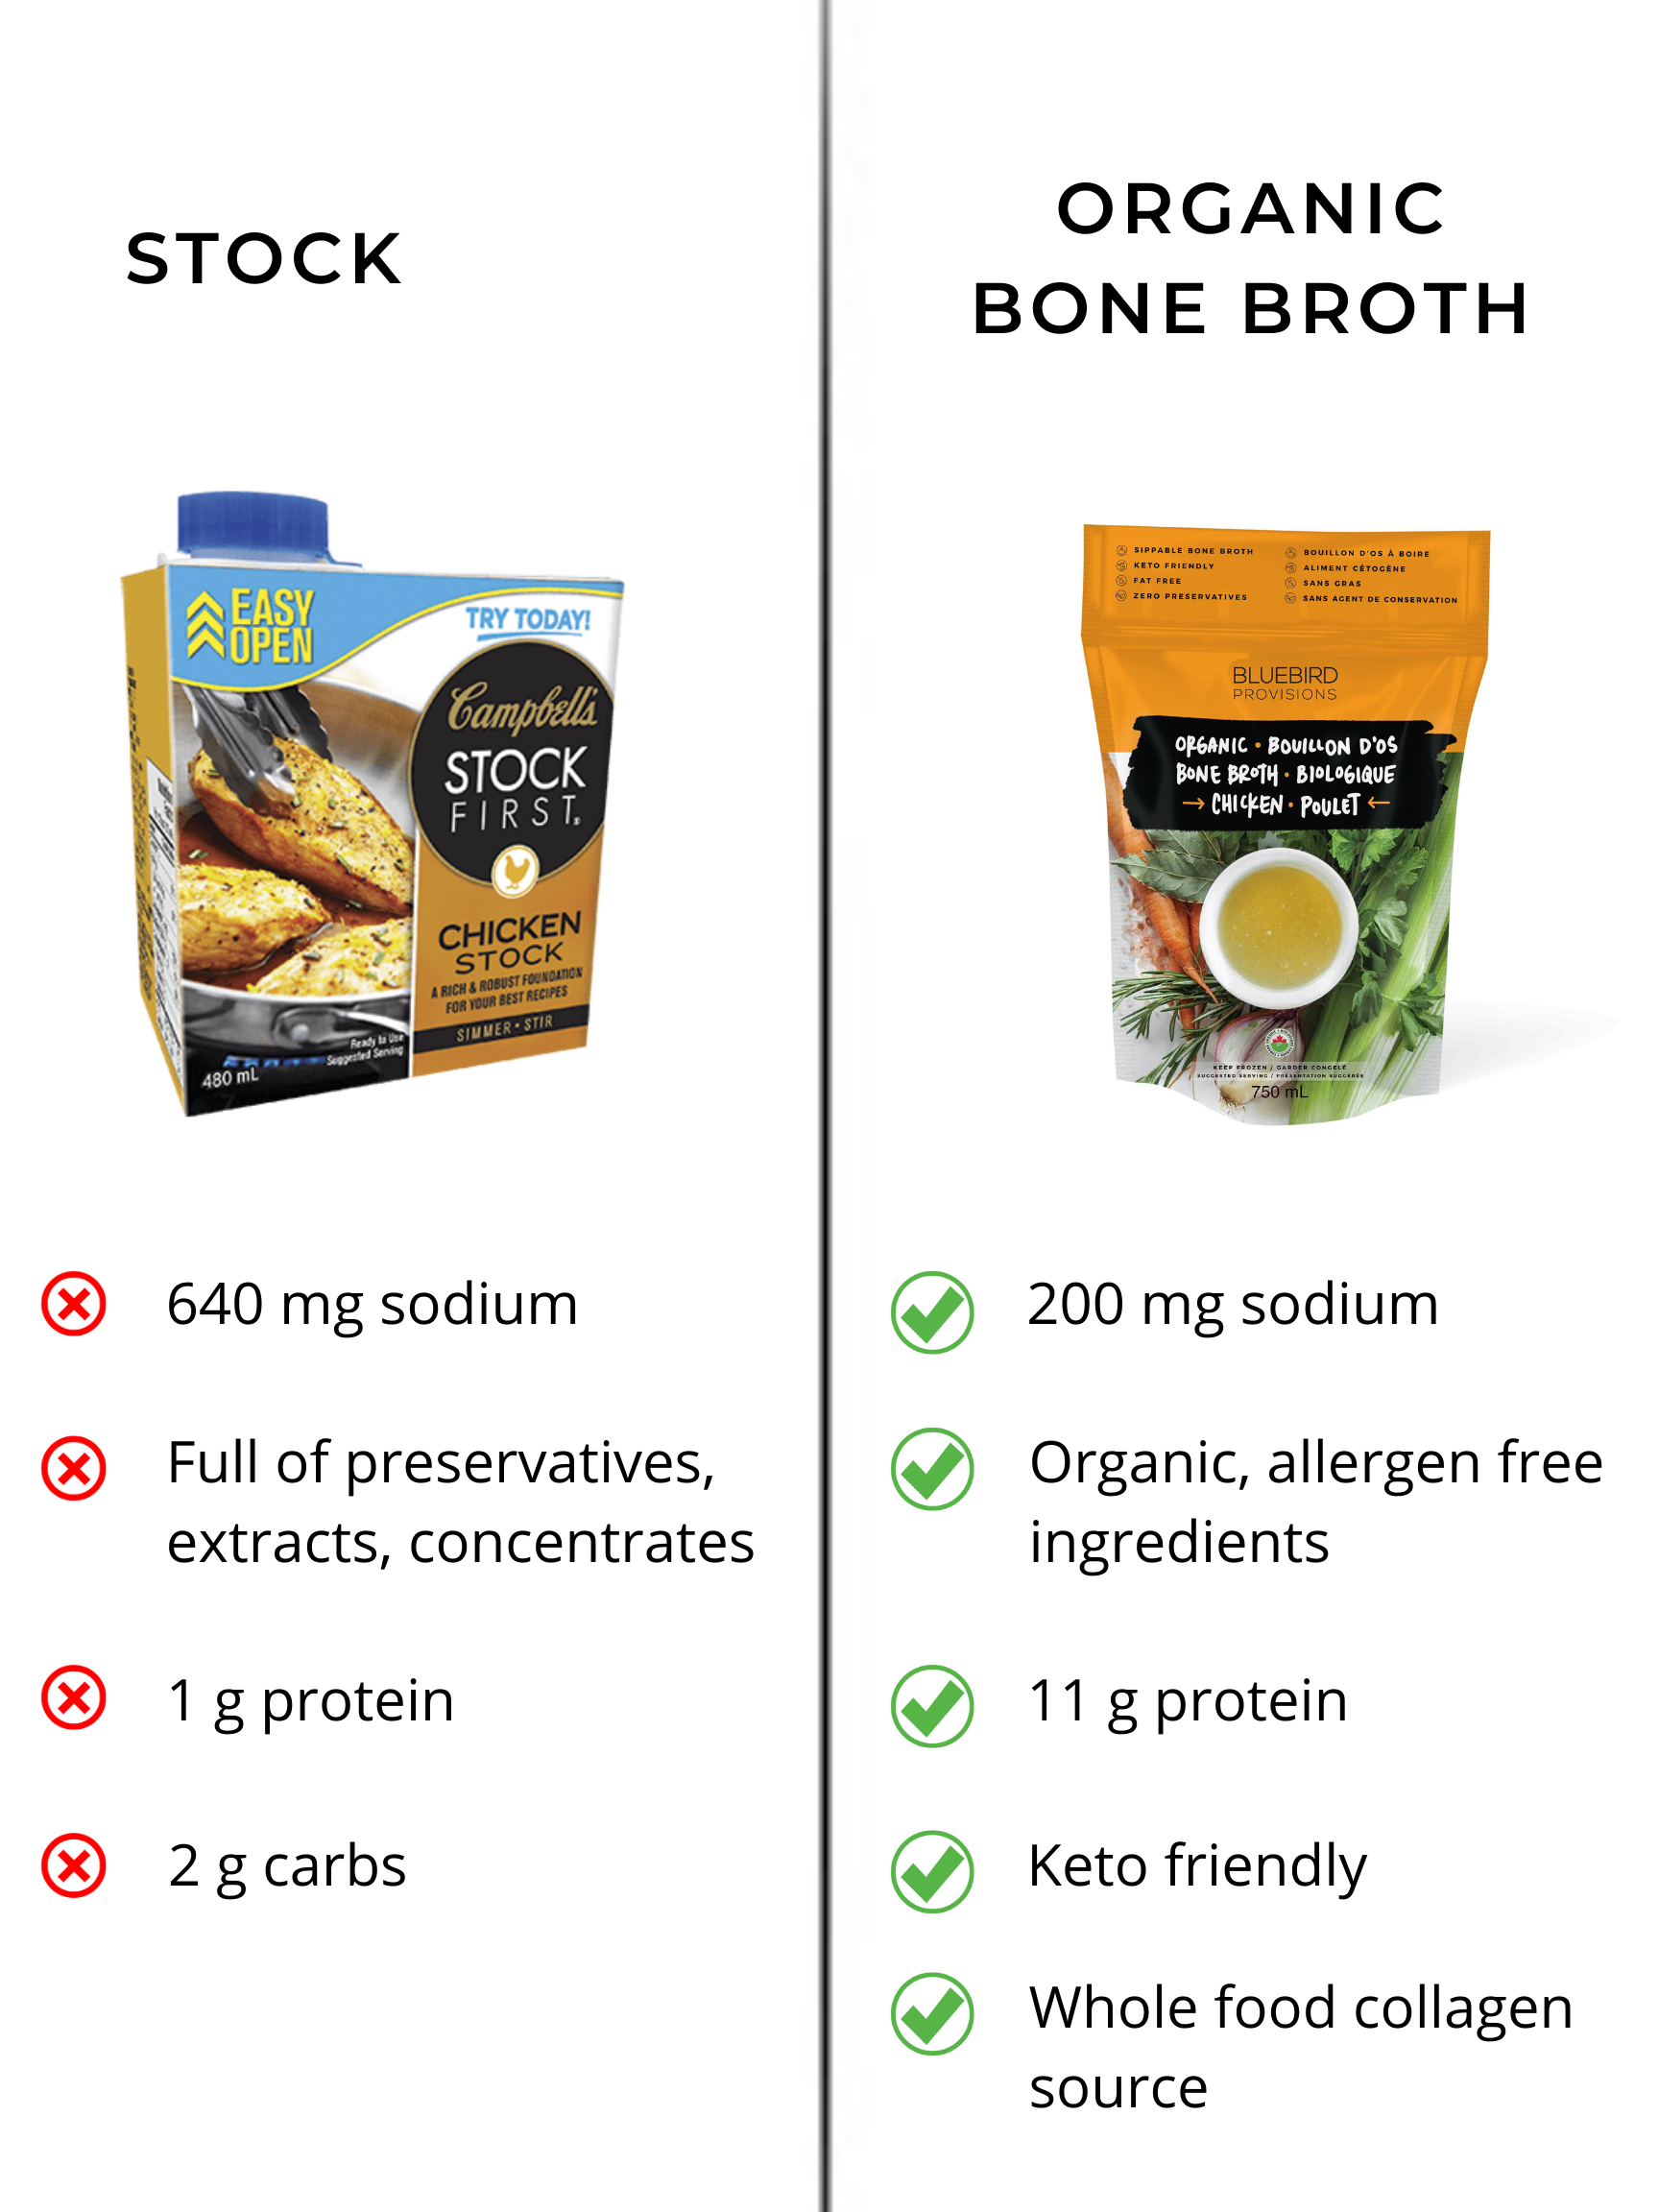 stock vs. bone broth differences infographic